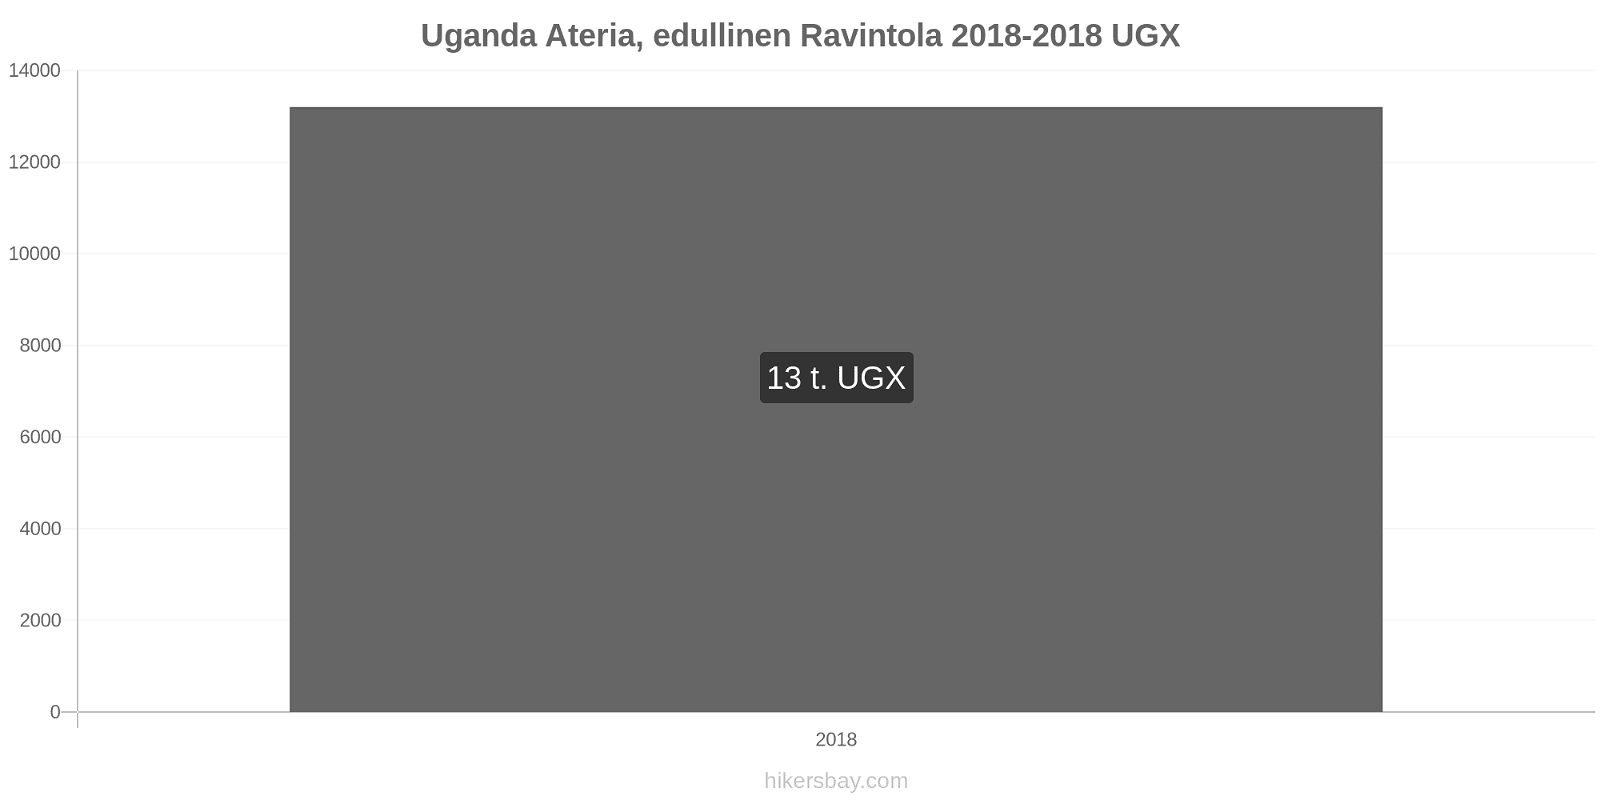 Uganda hintojen muutokset Ateria edullisessa ravintolassa hikersbay.com